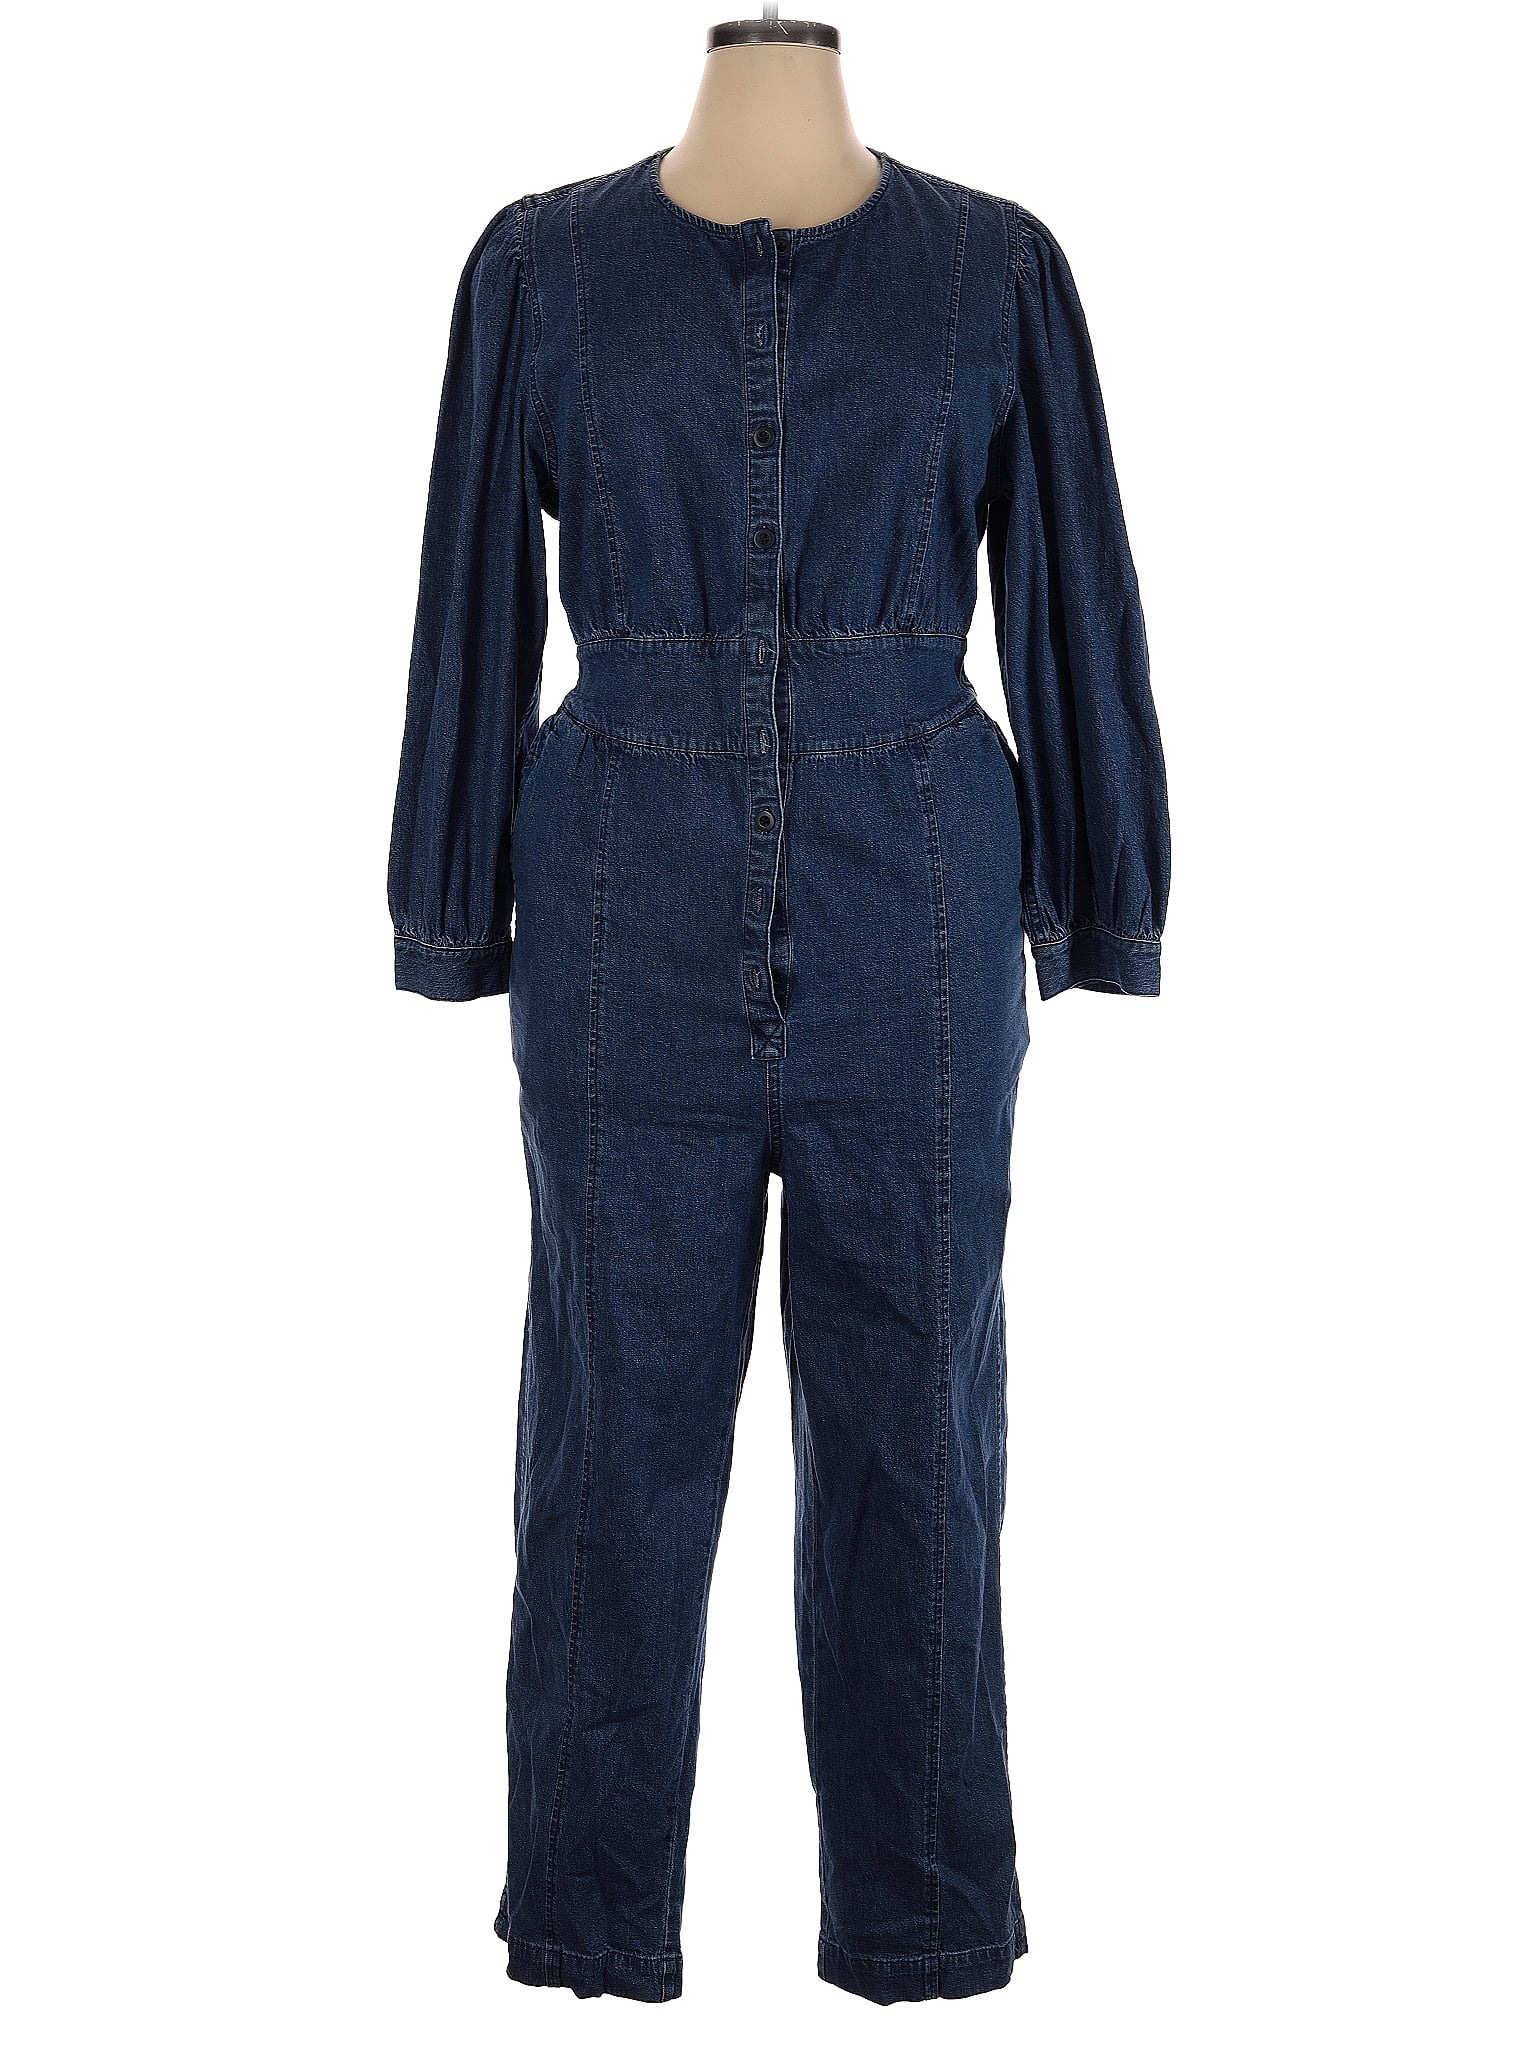 Madewell Blue Jumpsuit Size 16 - 59% off | thredUP